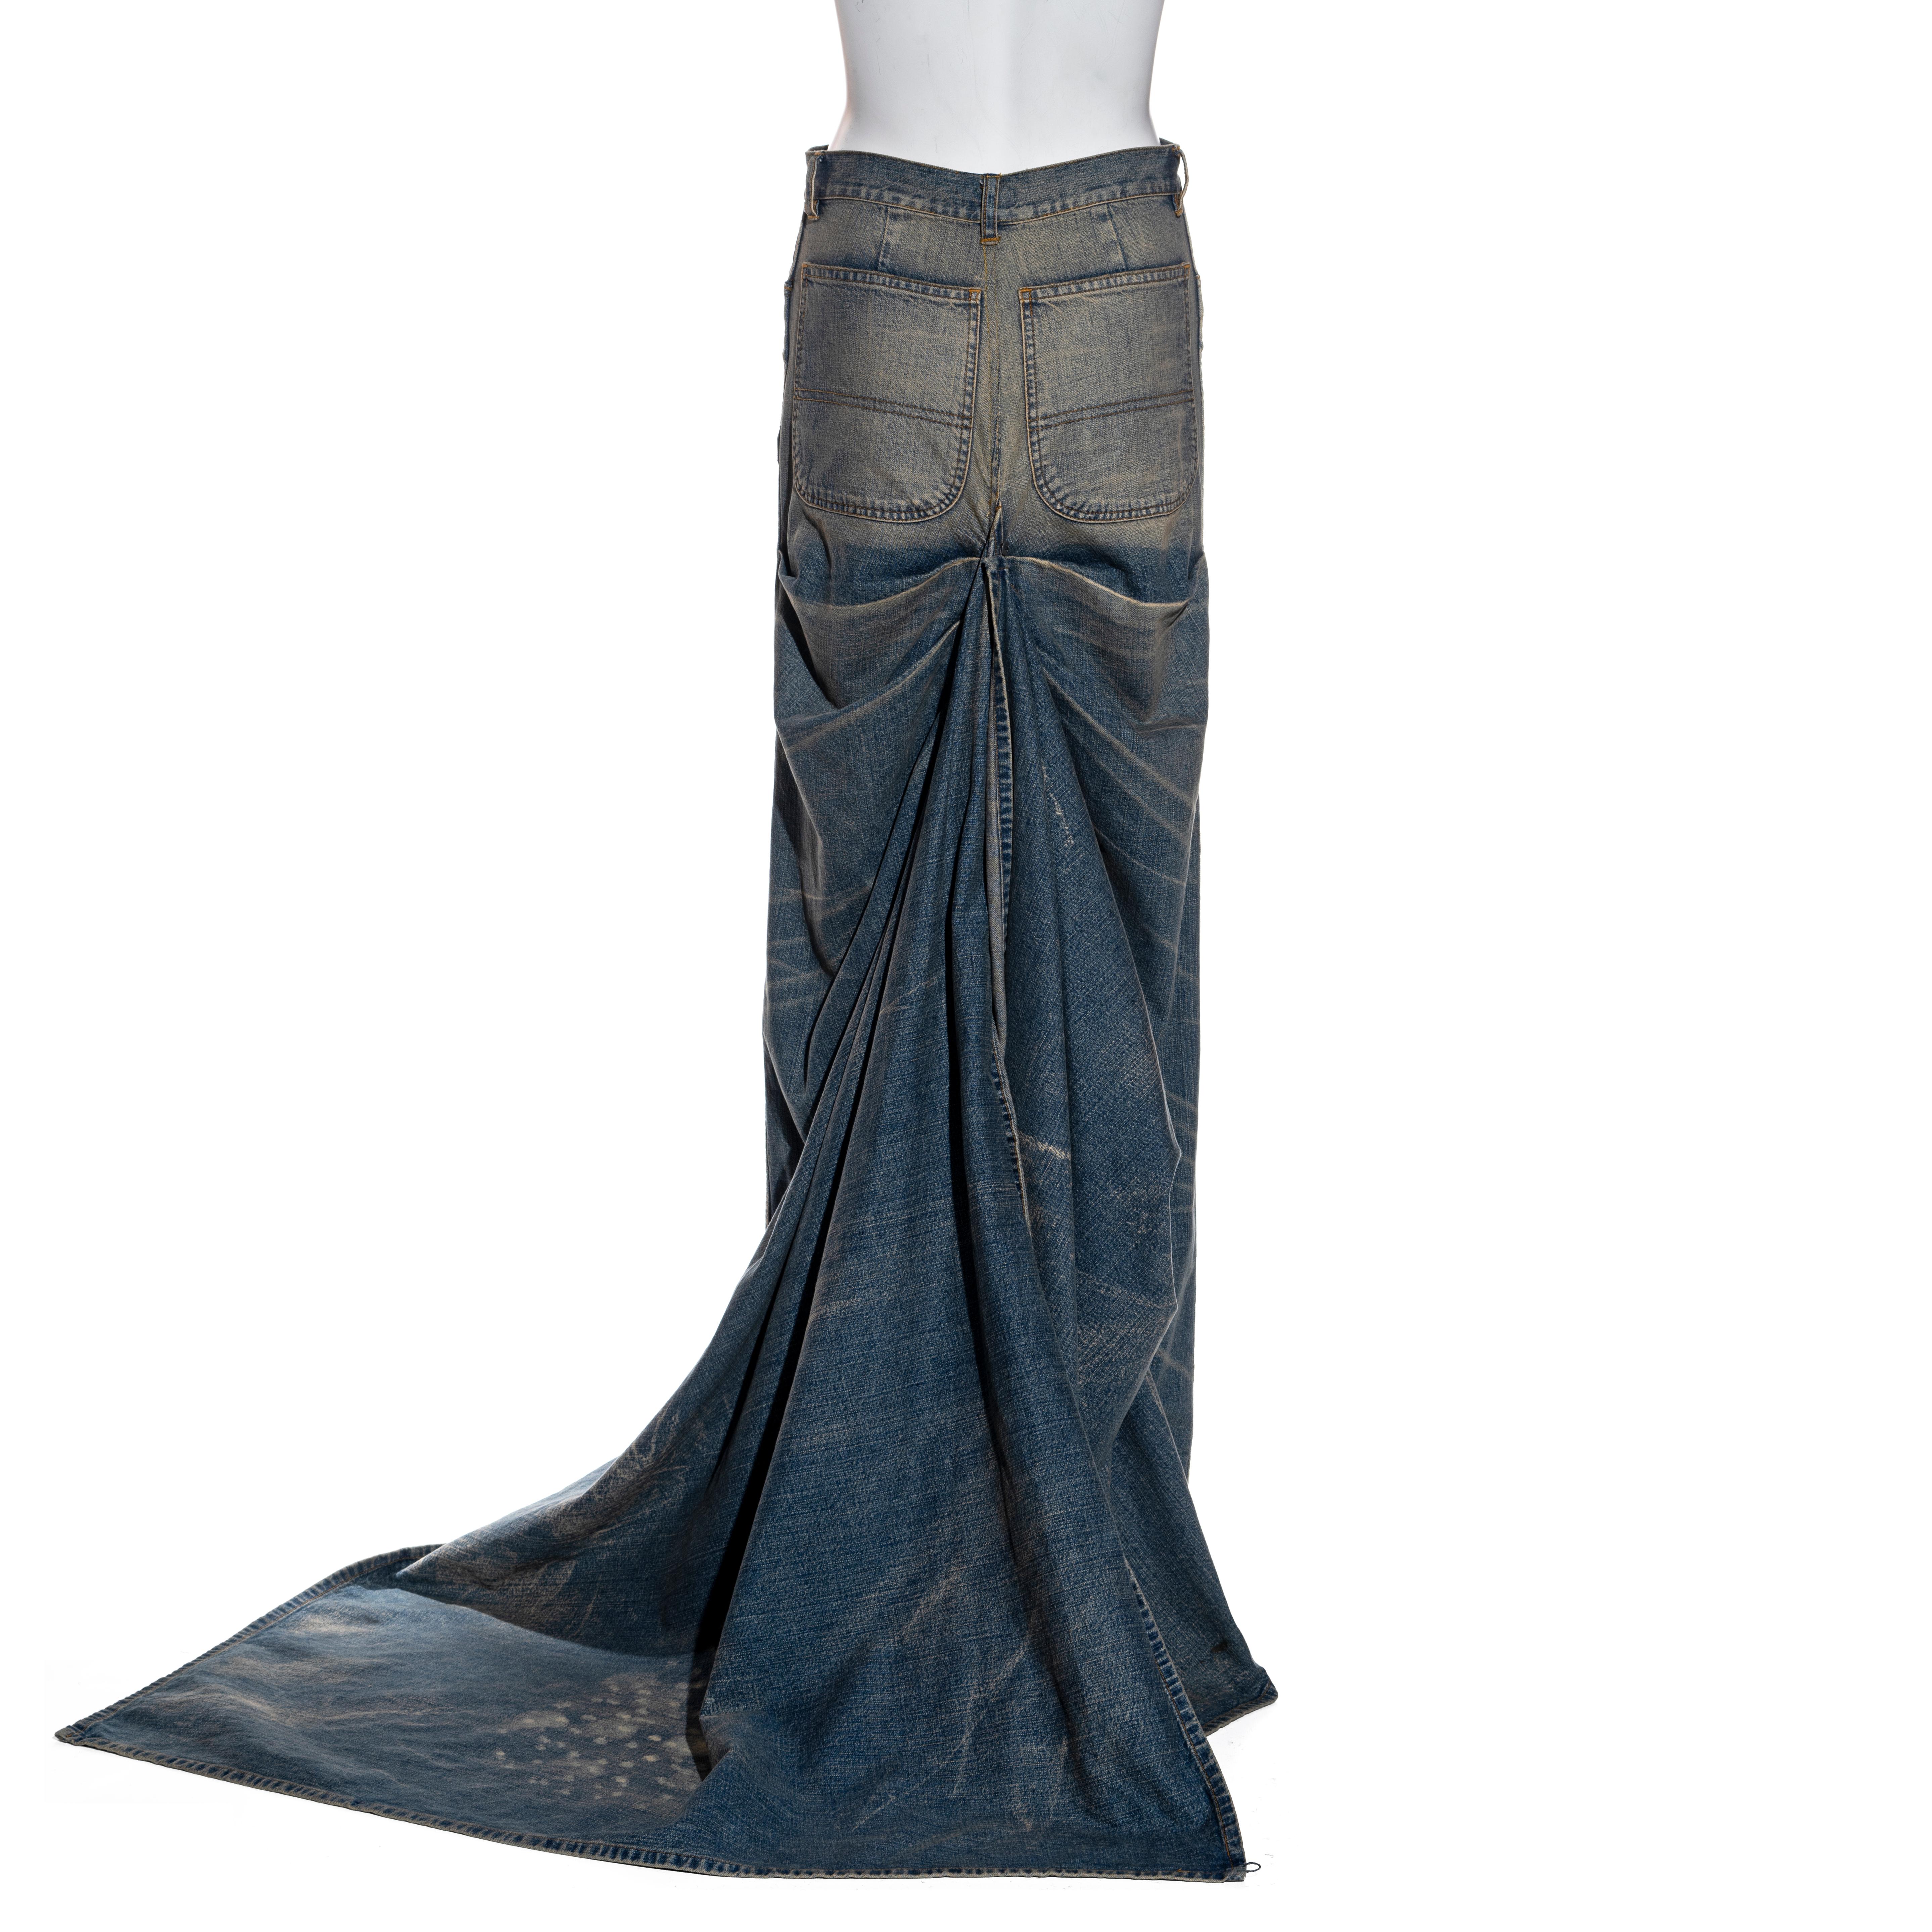 Ralph Lauren distressed denim floor-length bustle skirt with train, ss 2003 5